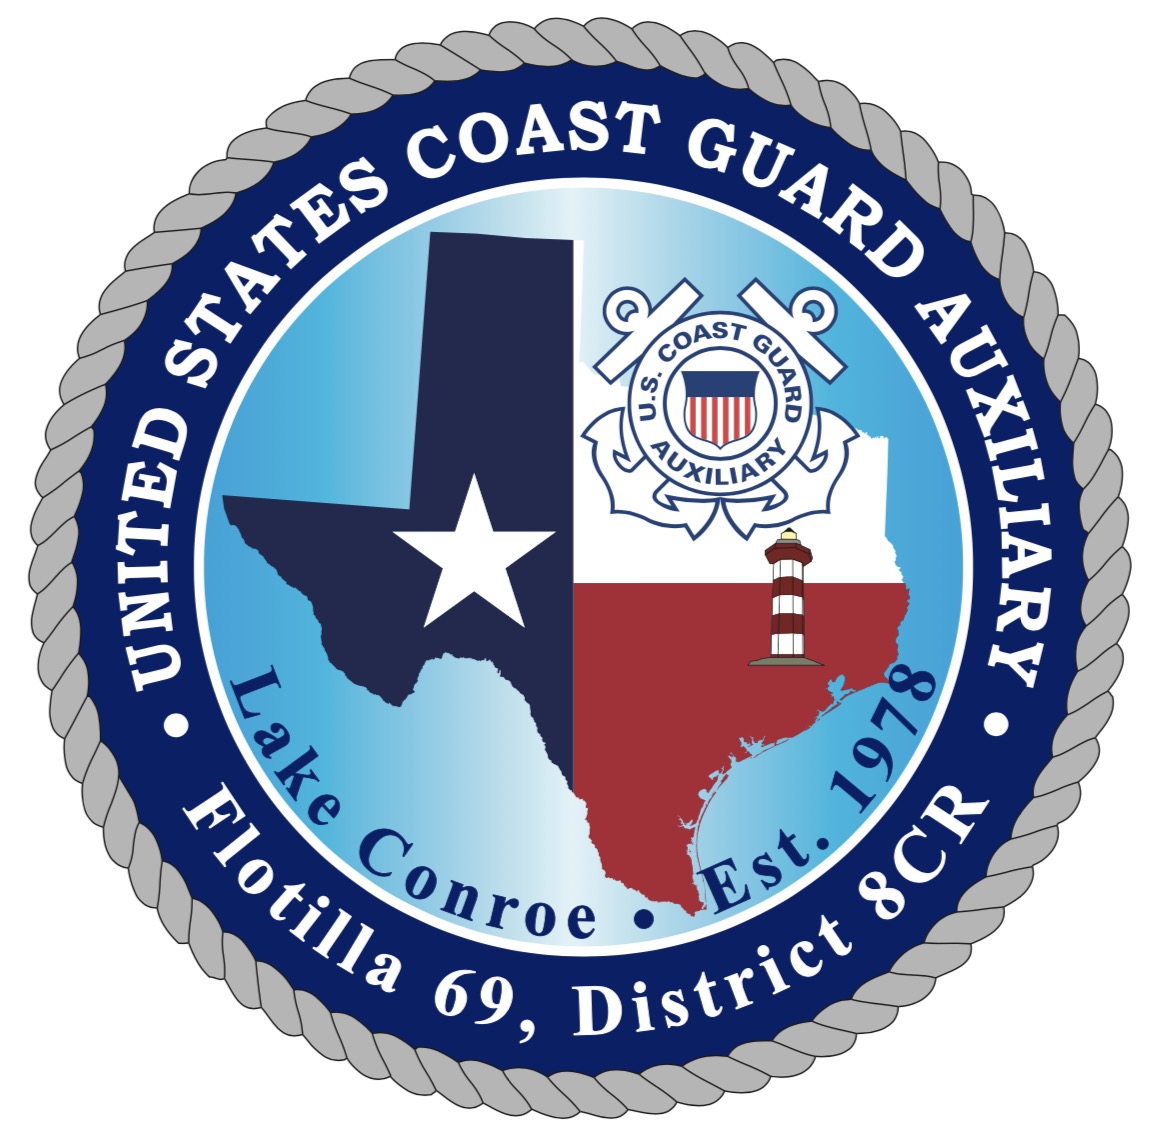 Official Seal of Flotilla 6-9, District 8CR